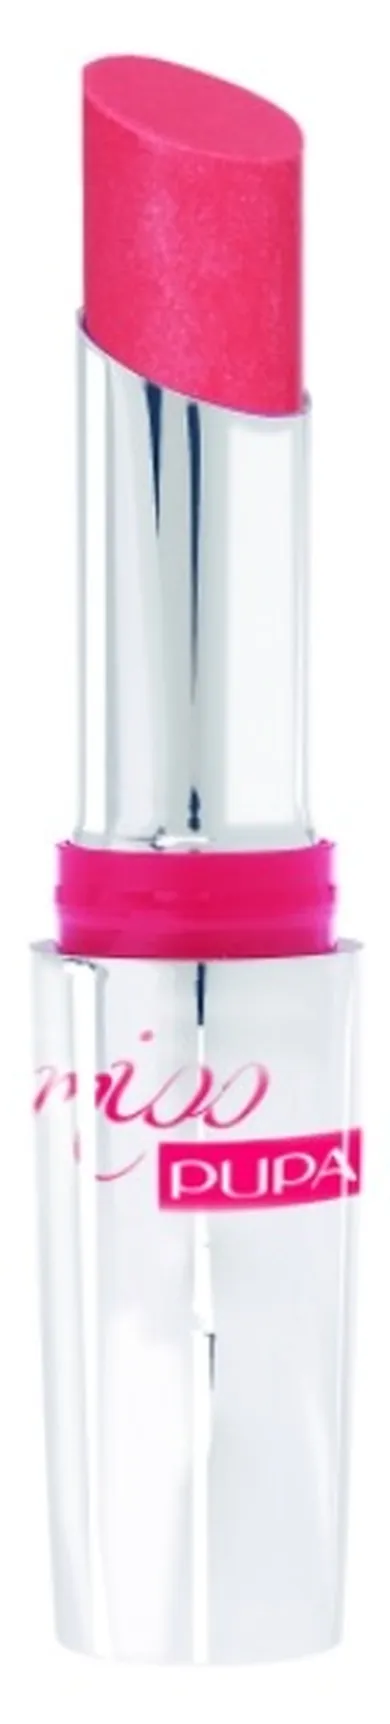 Pupa, Miss Pupa Ultra Brilliant Lipstick, pomadka do ust 200, 2,4 ml